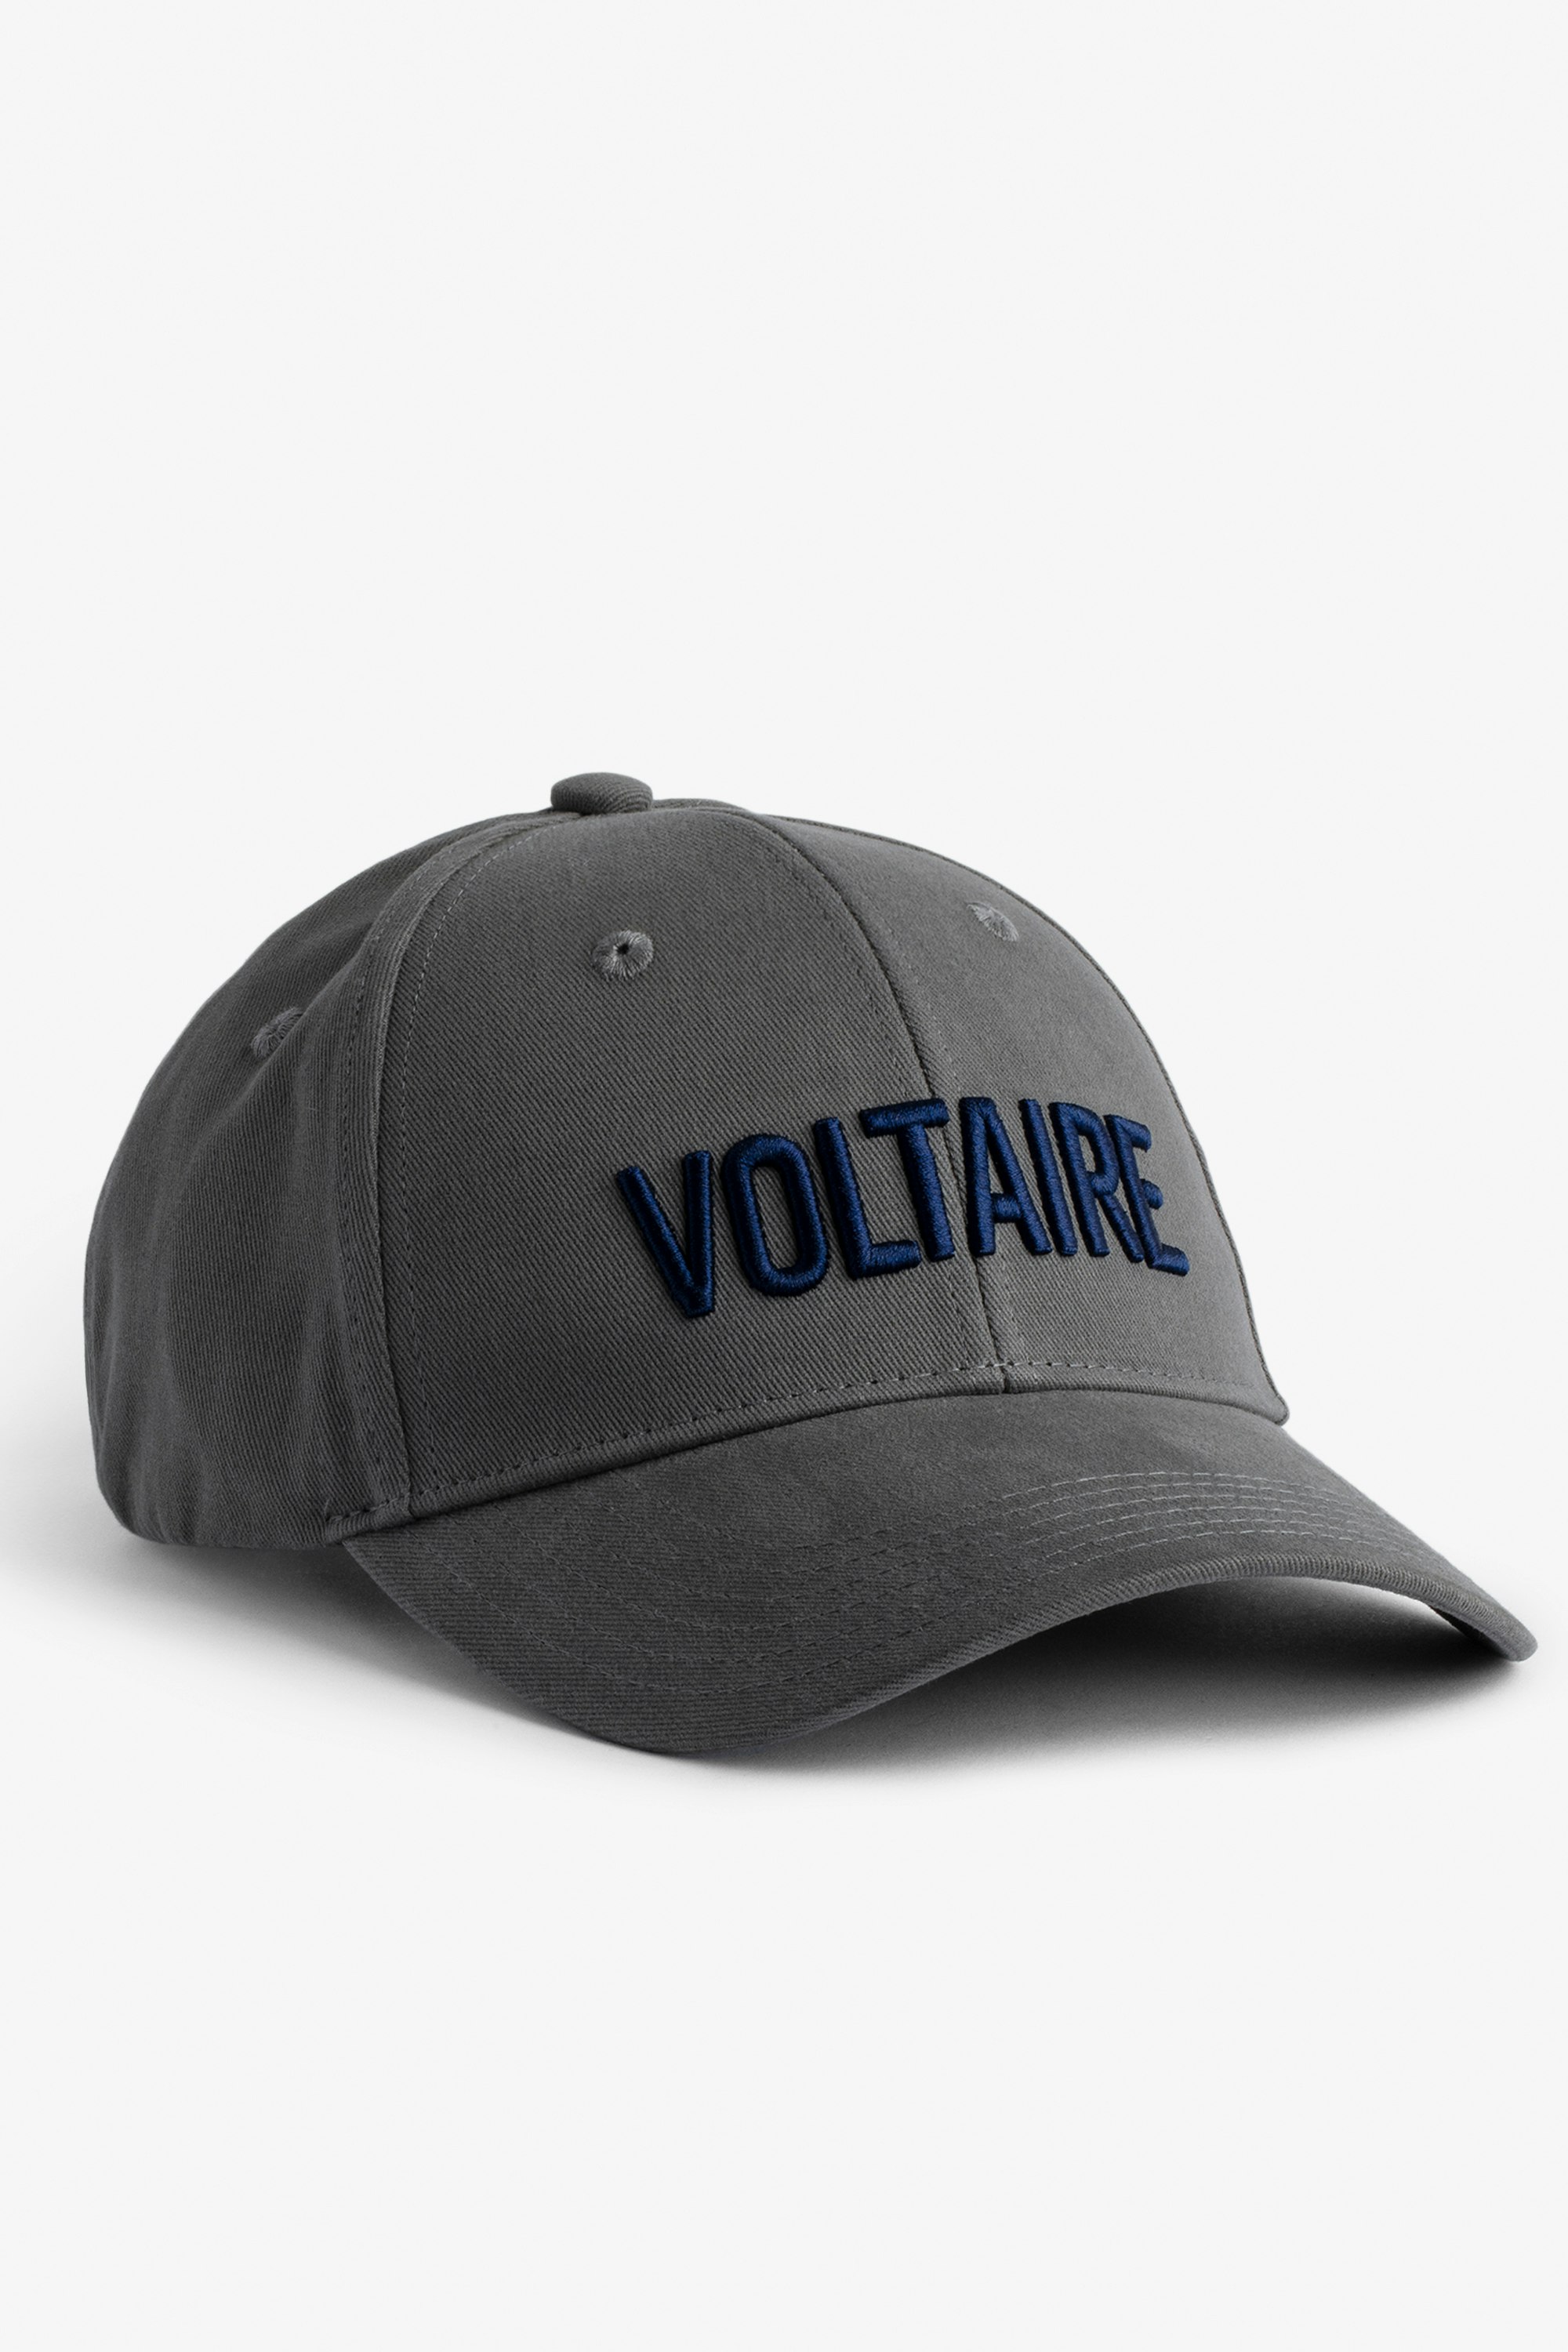 Gorra Klelia Voltaire Gorra gris de algodón para hombre con bordado «Voltaire».